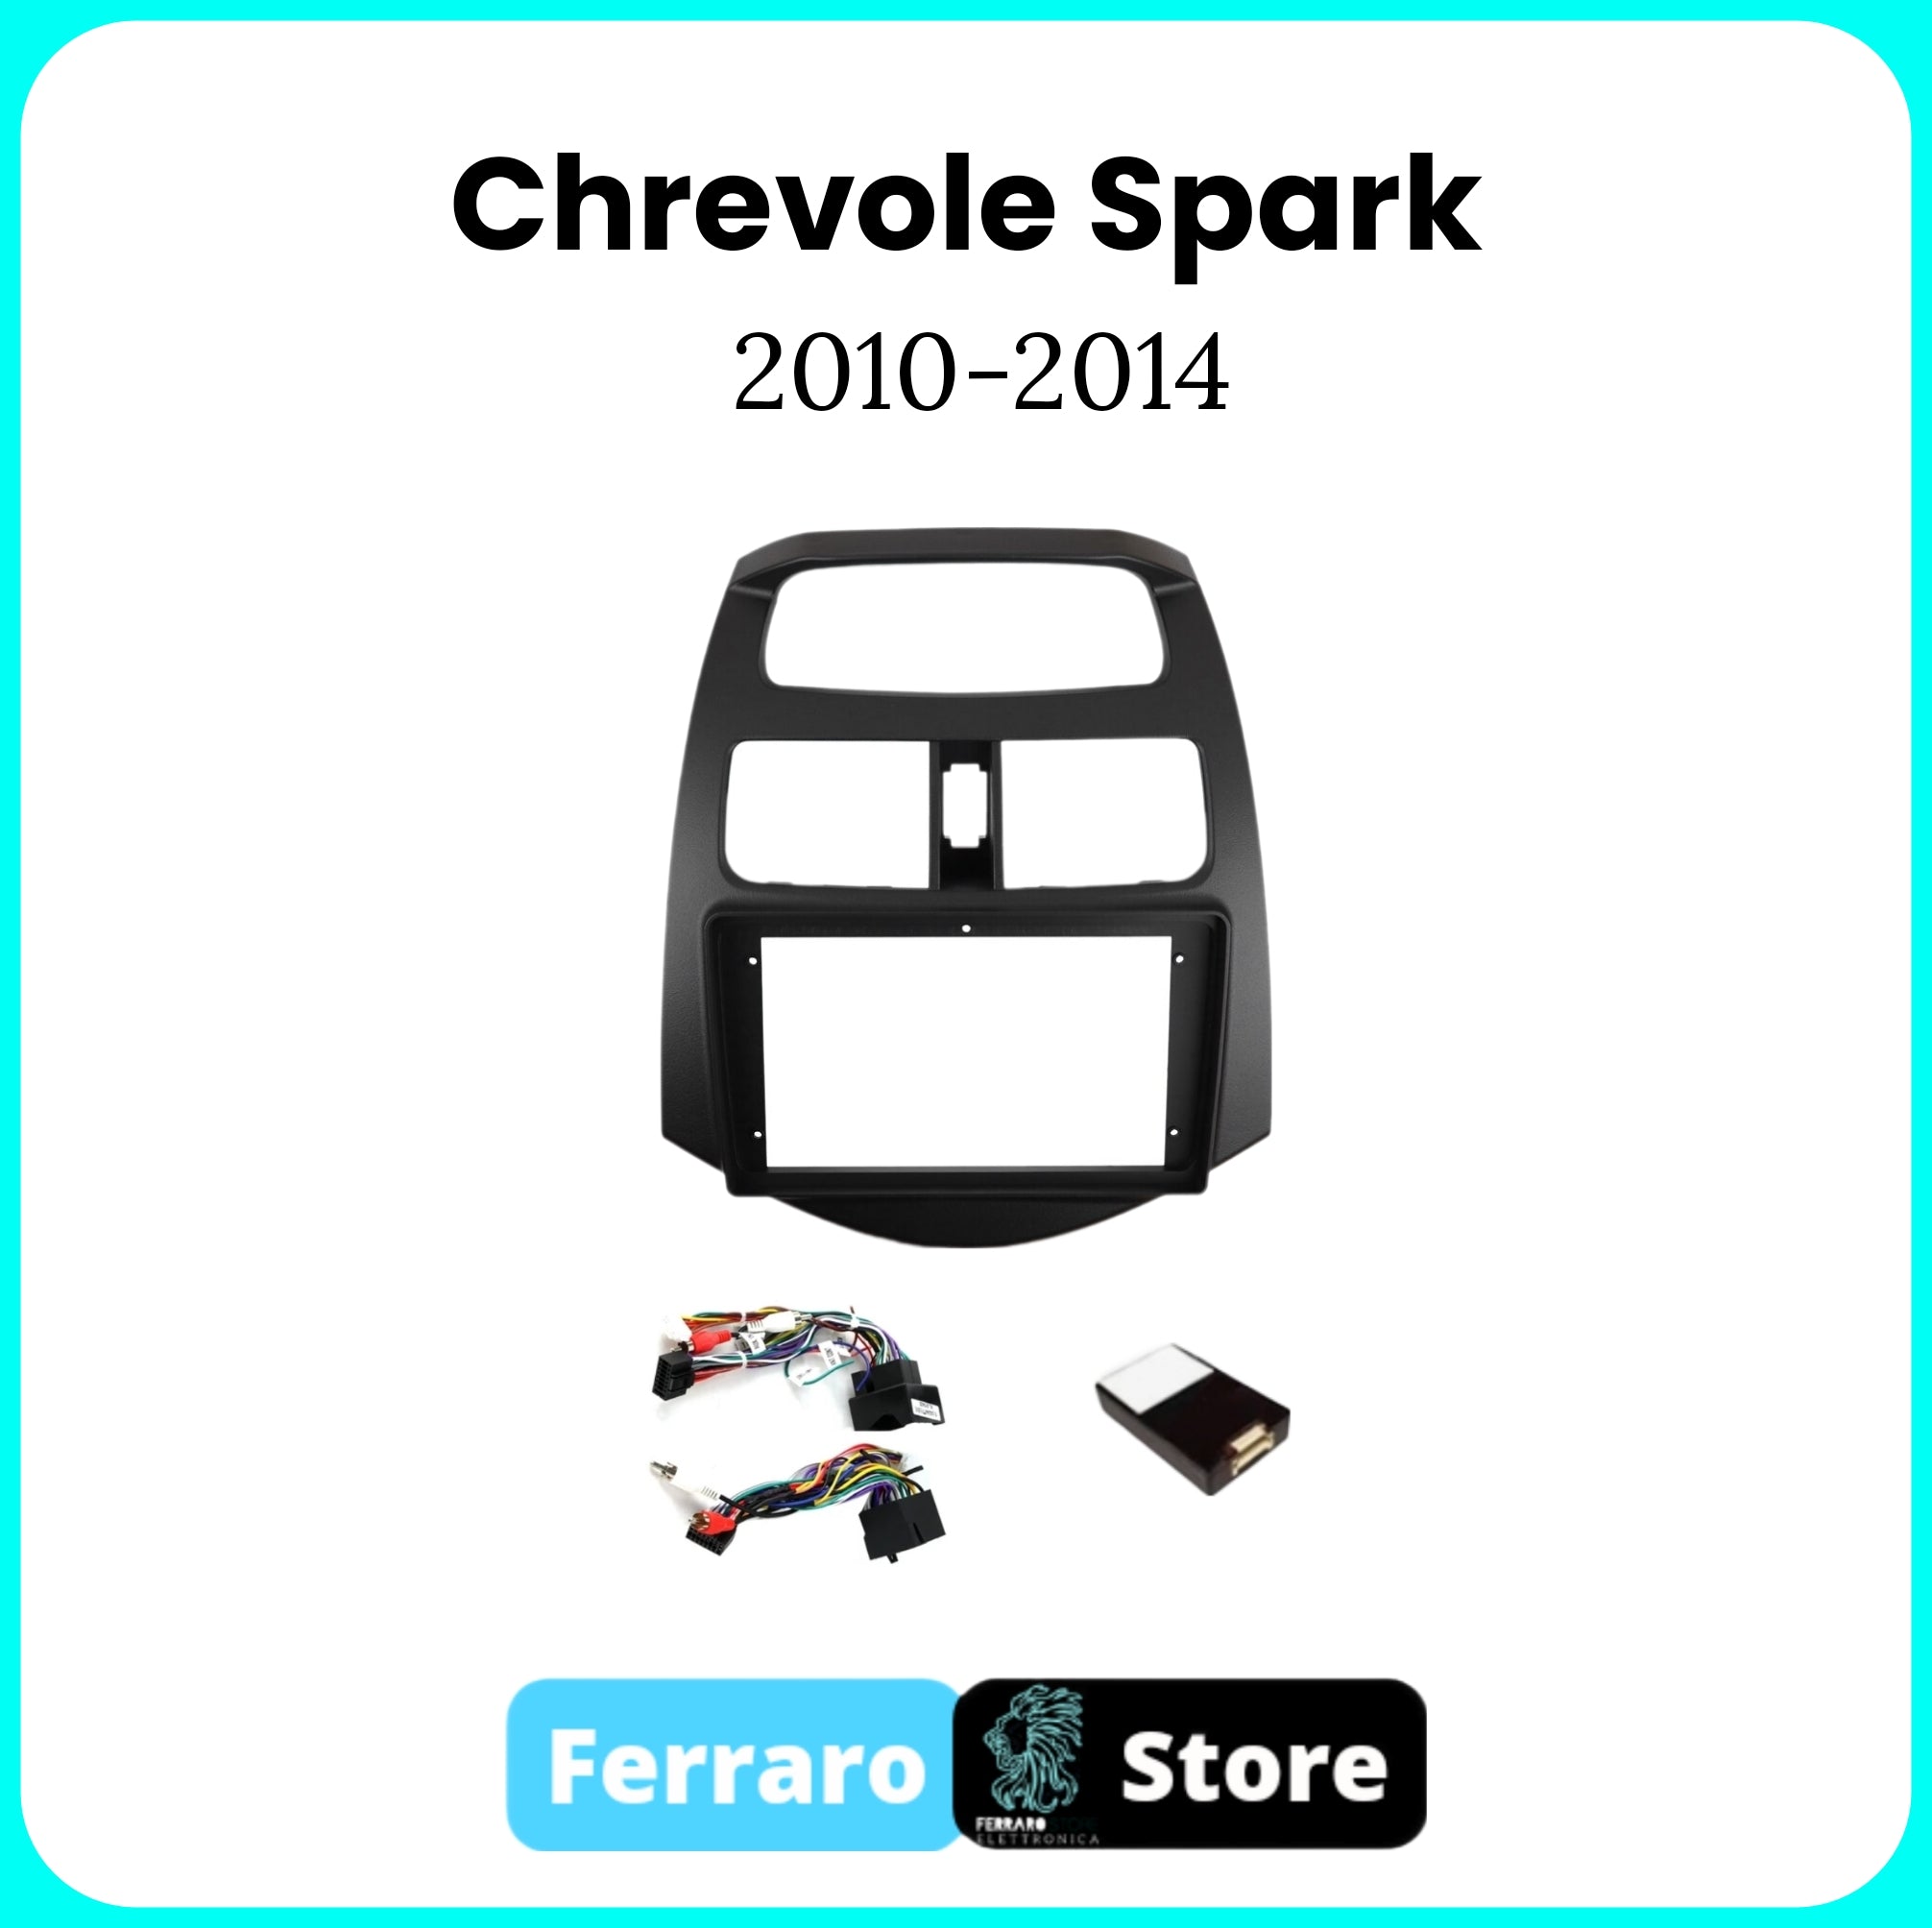 Kit Montaggio Autoradio 9"Pollici Chrevole Spark [2010 - 2014] - Mascherina, Cablaggio Autoradio Android